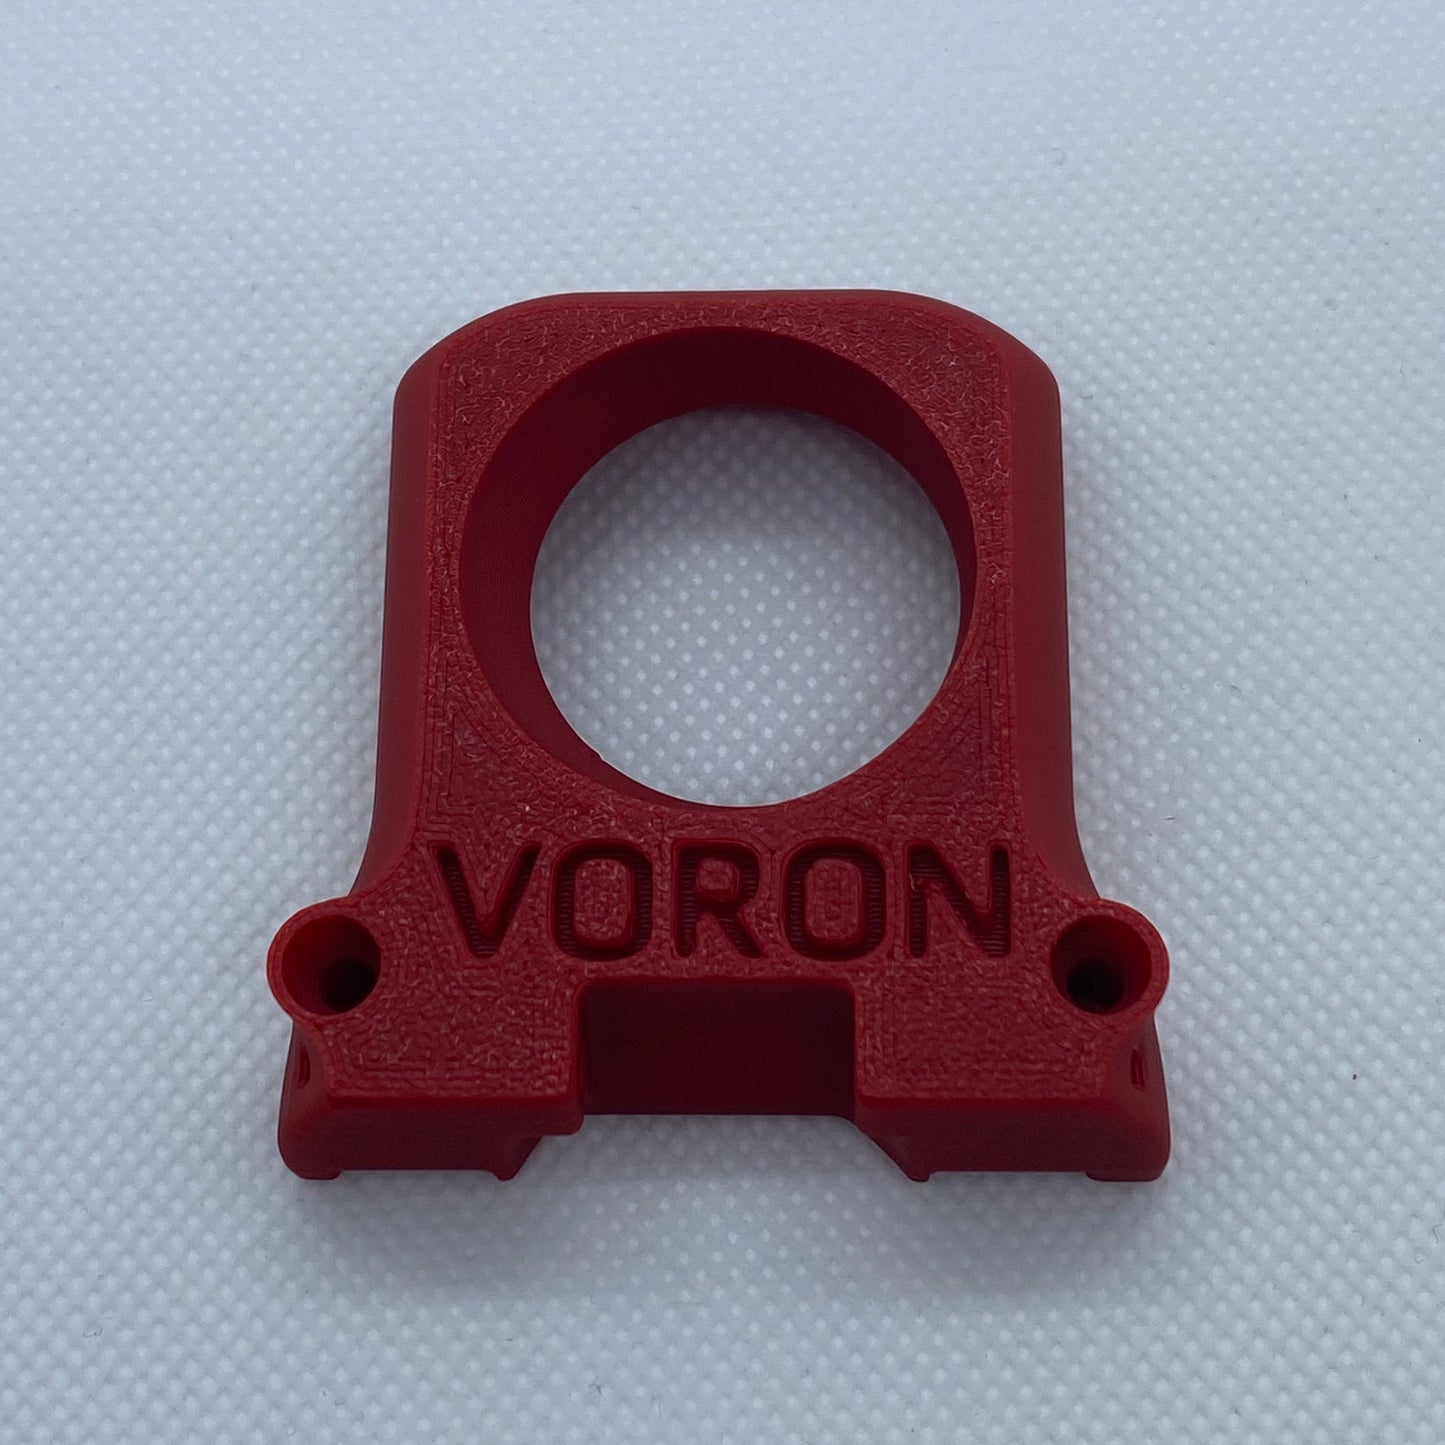 Voron Trident Functional Parts